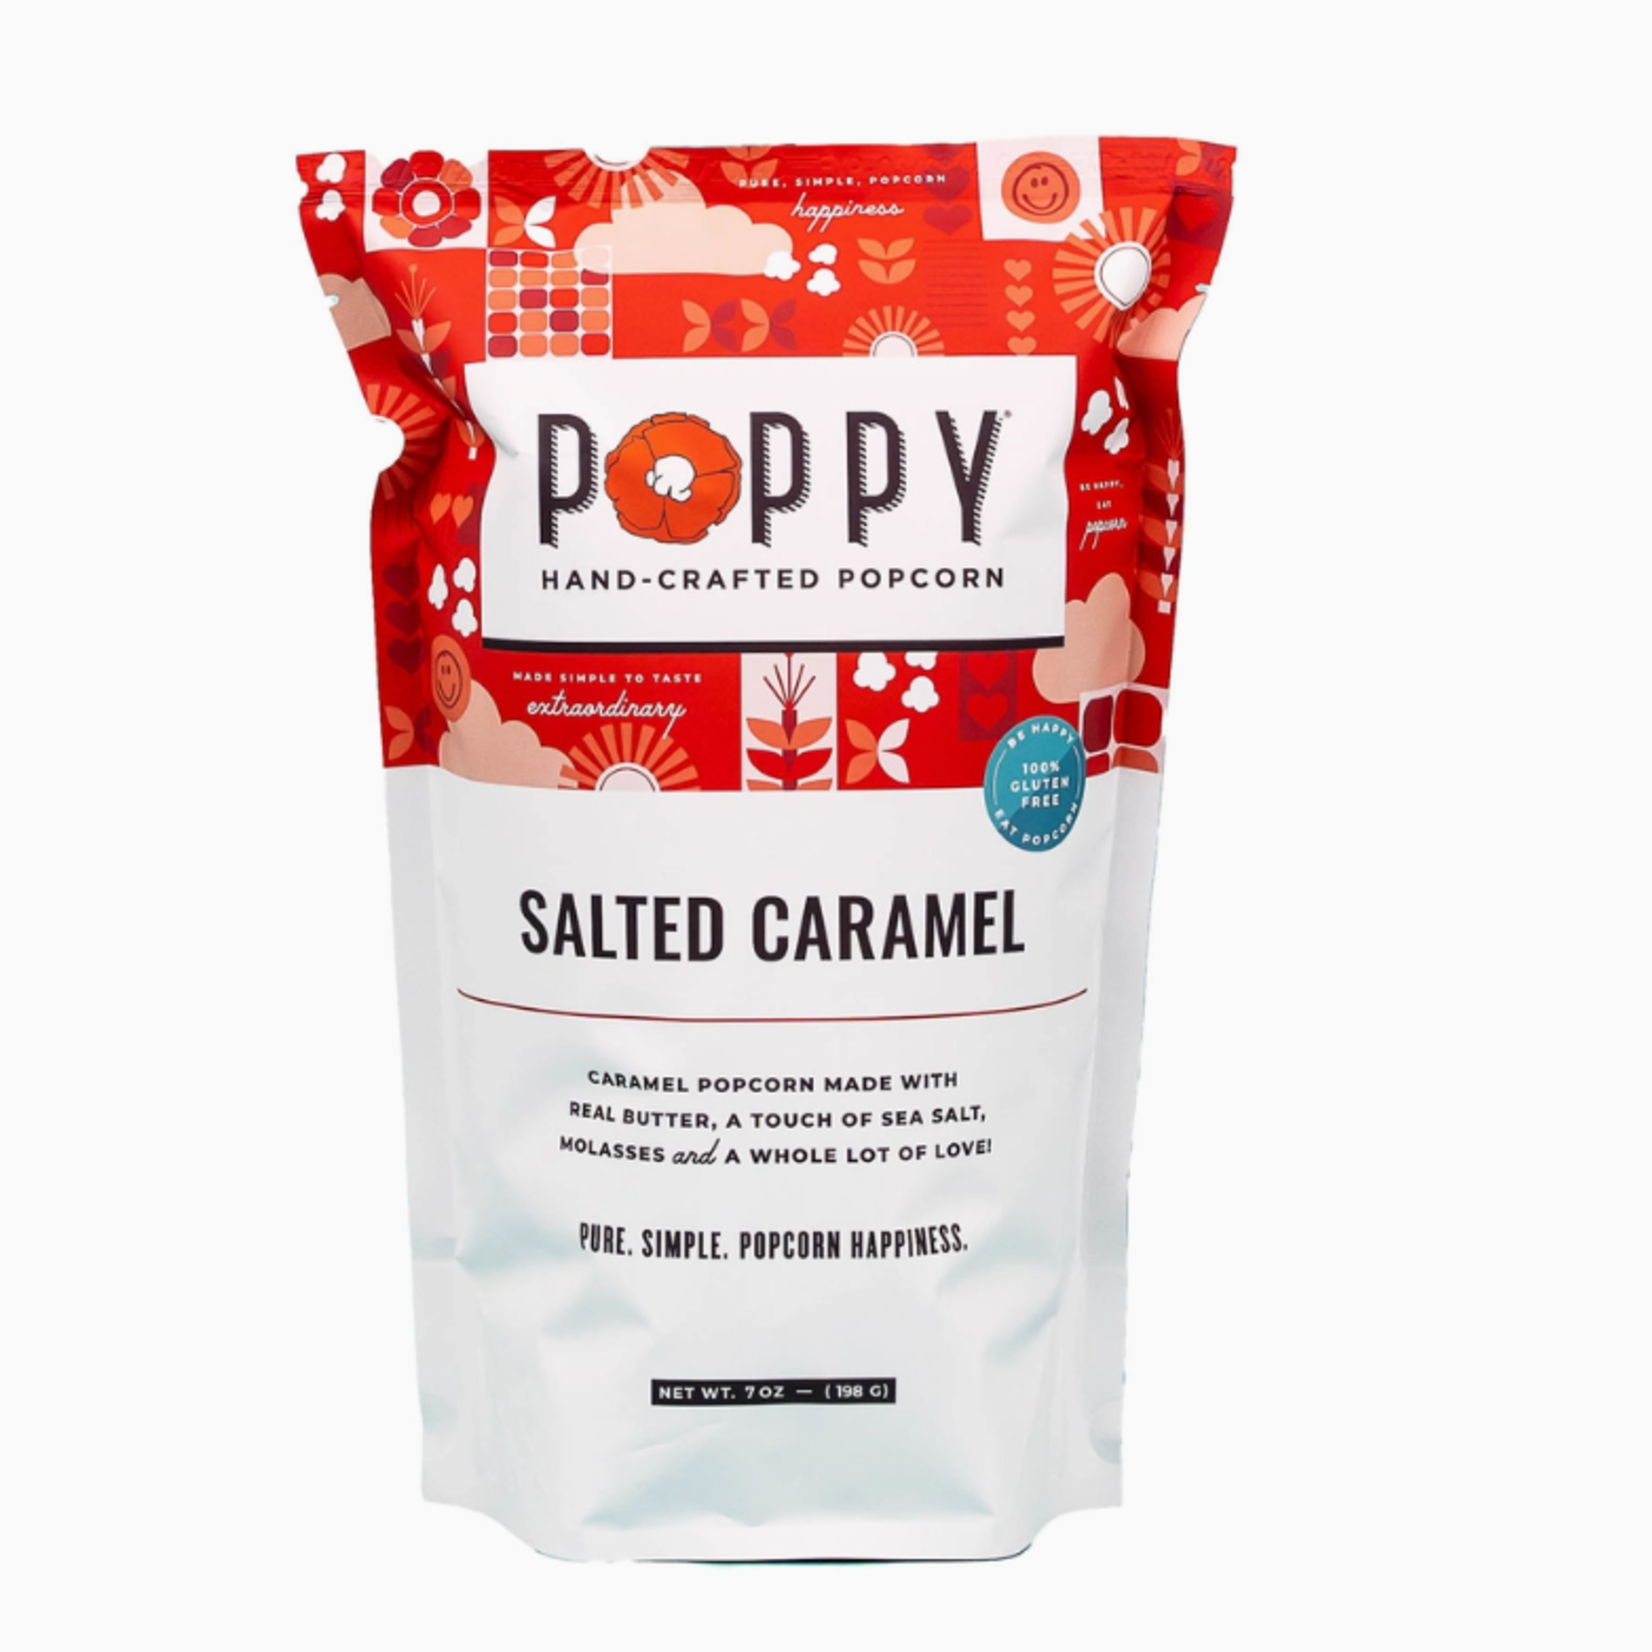 Poppy Handcrafted Popcorn Salted Caramel